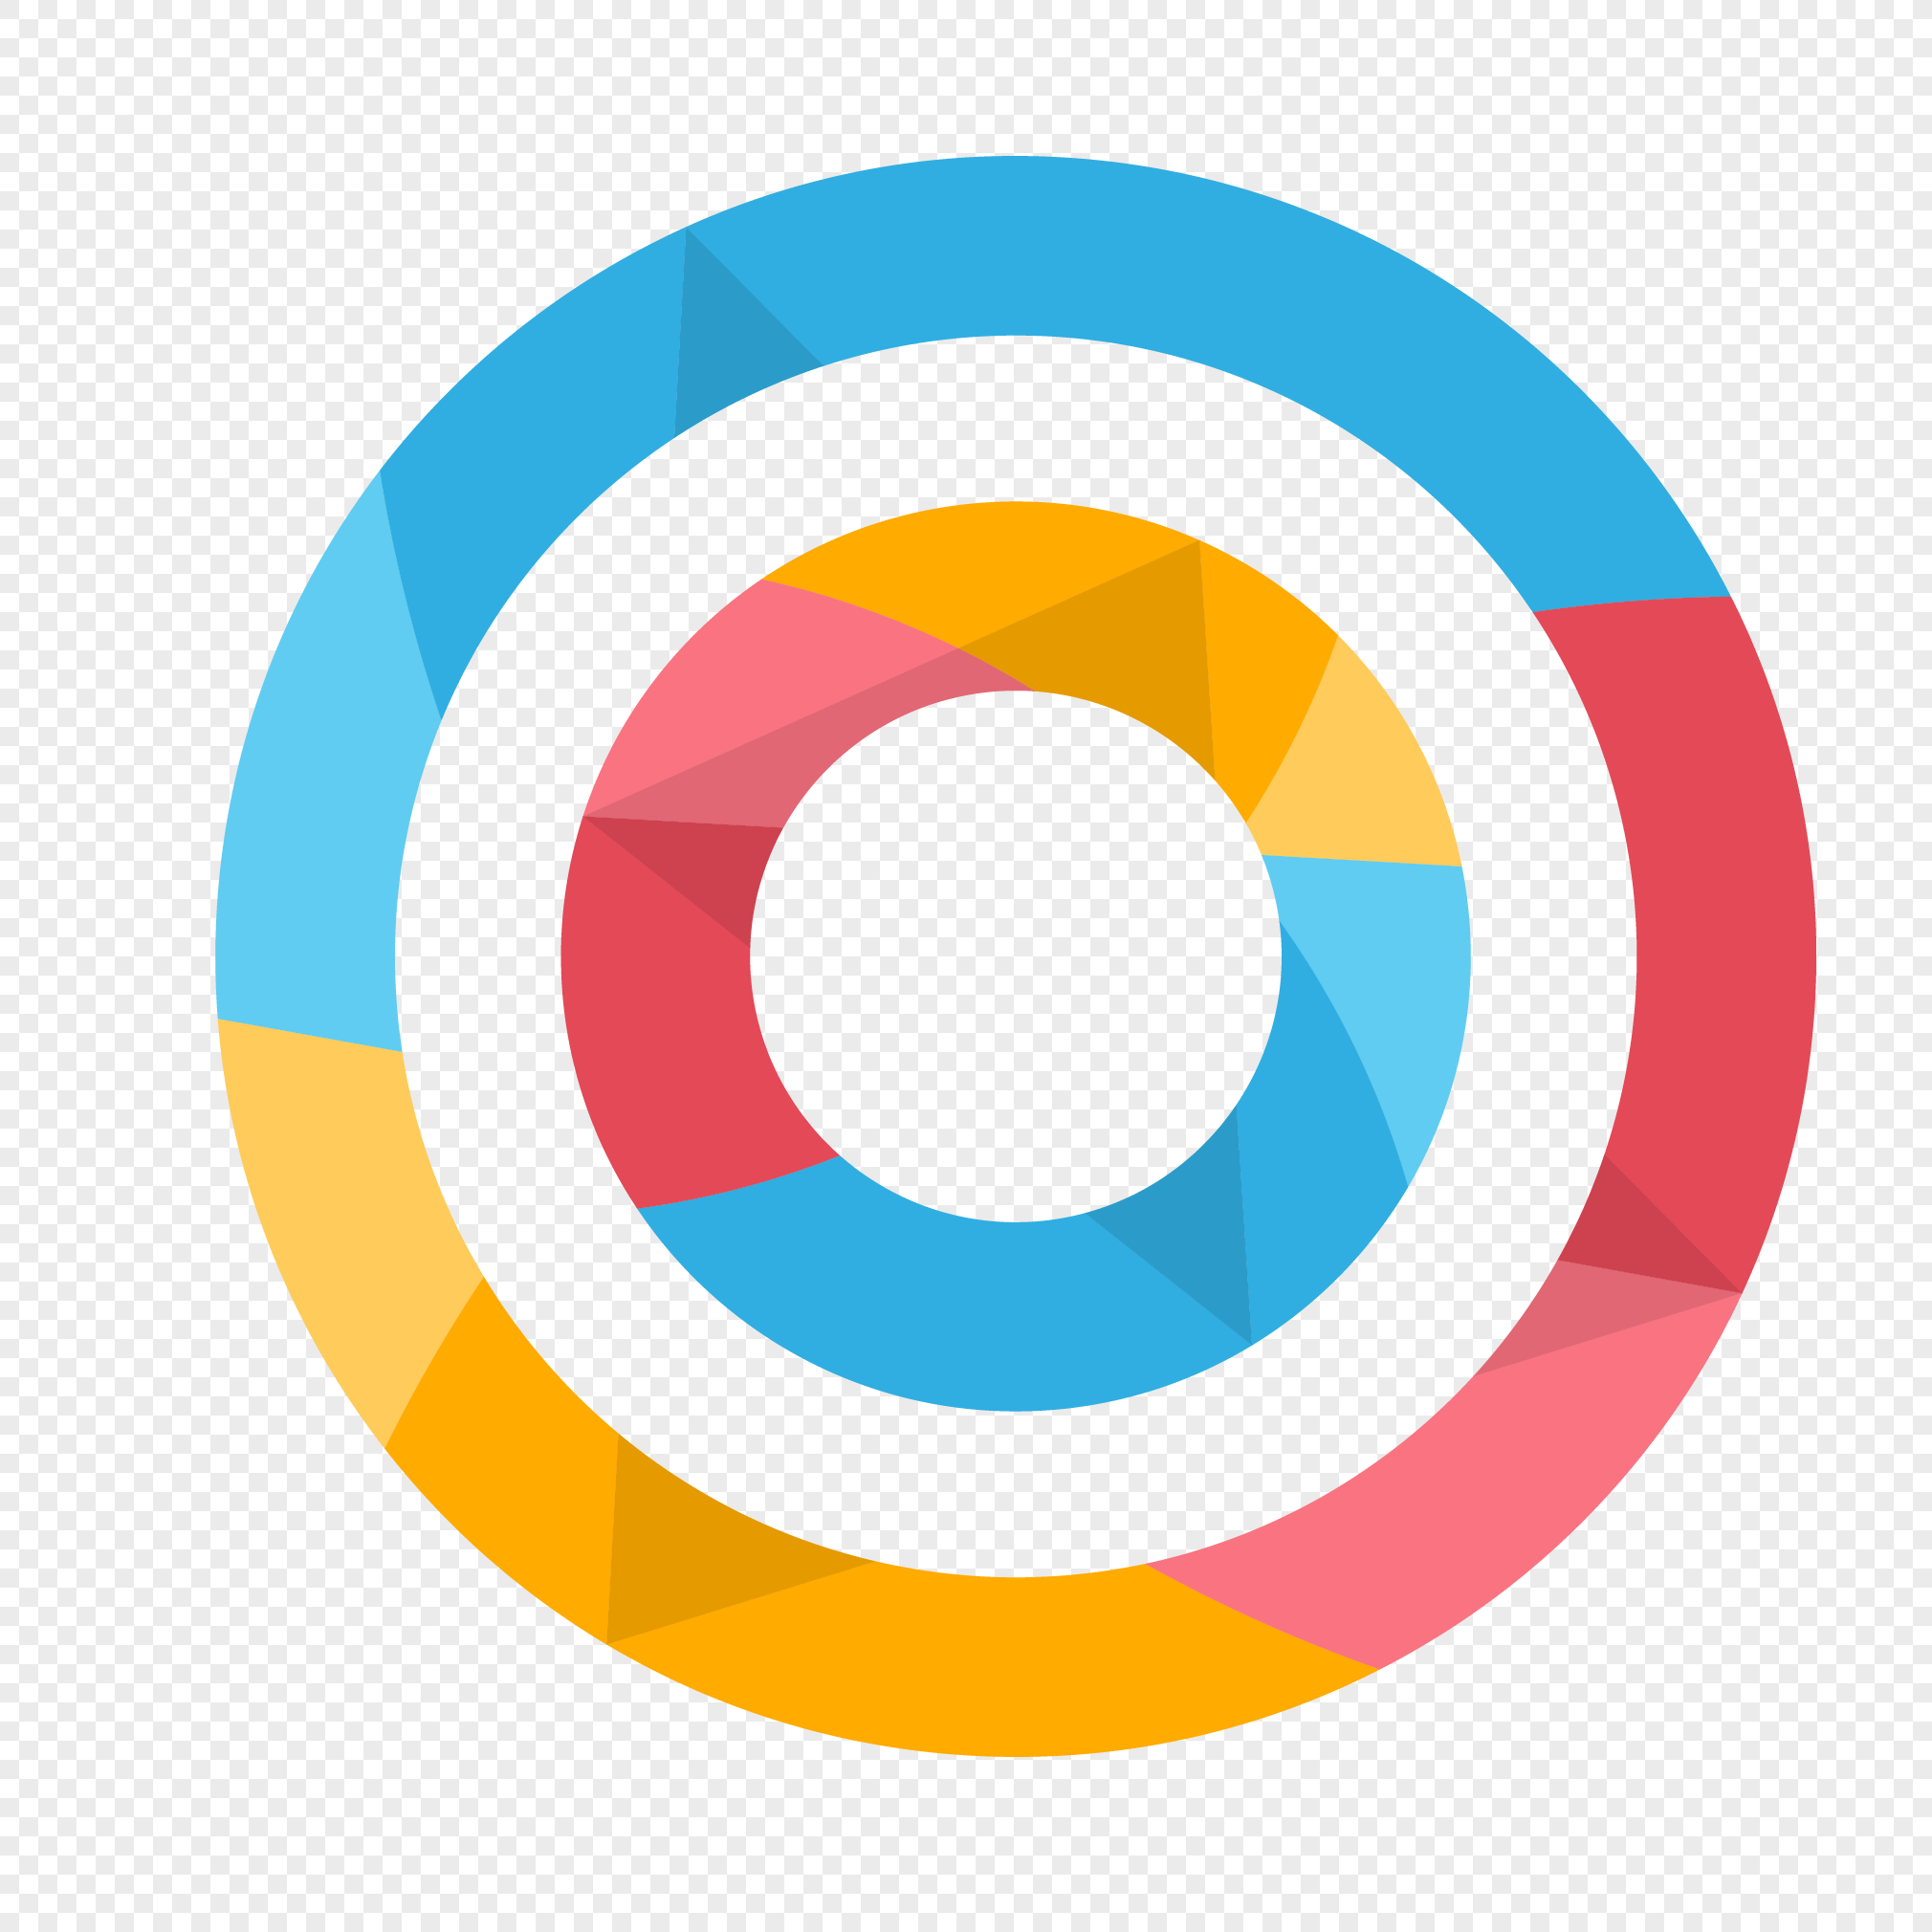 Colour Circle Logo - Color circle logo png image_picture free download 400839284_lovepik.com